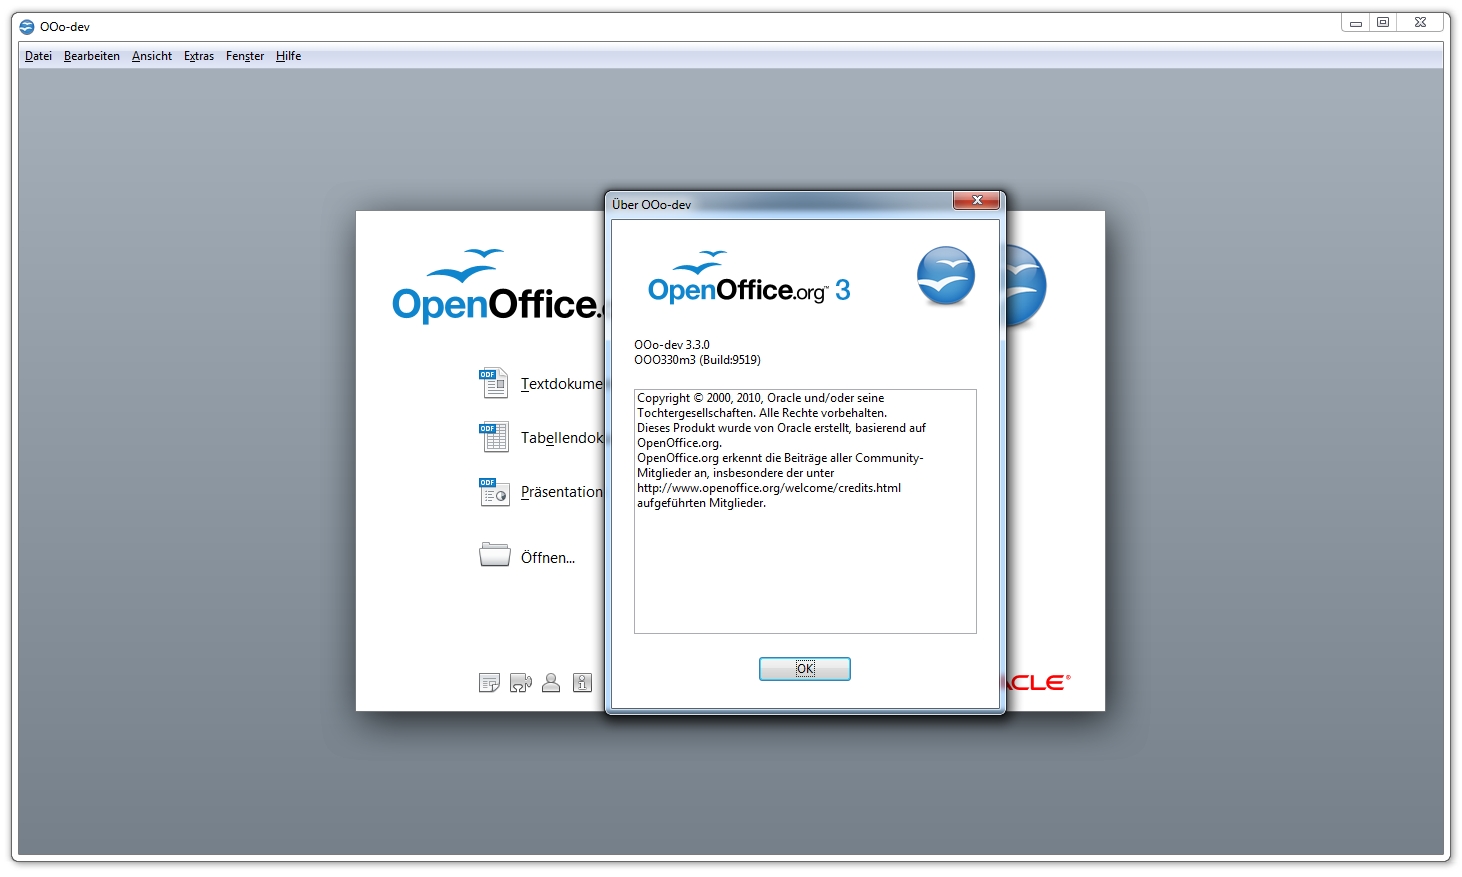 Office-Software: Openoffice.org 3.3 als kostenloser Download - Golem.de